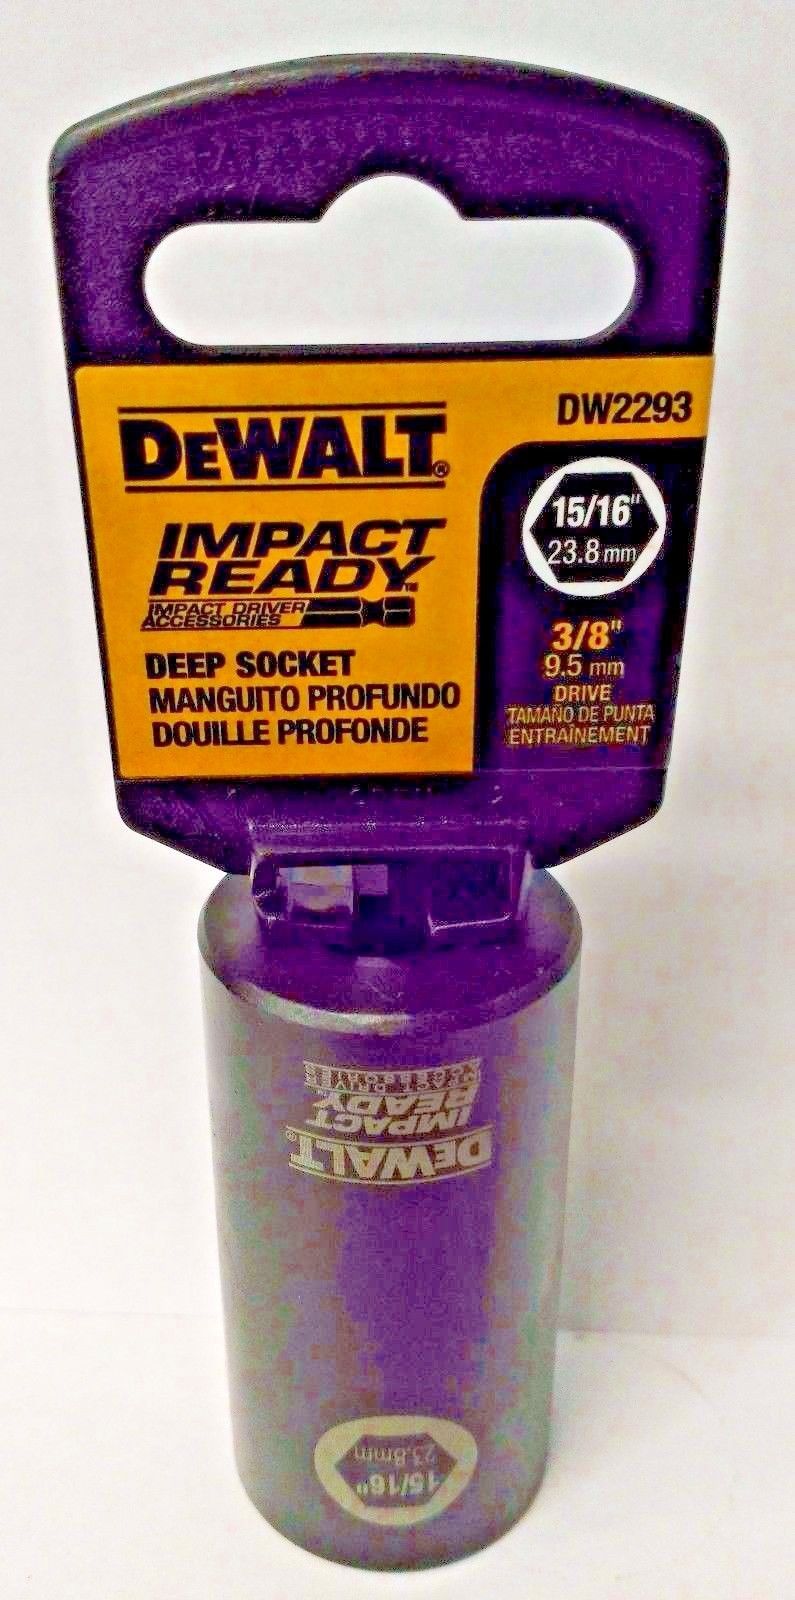 Dewalt DW2293 15/16" Impact Ready 6 Point Deep Socket 3/8" Drive